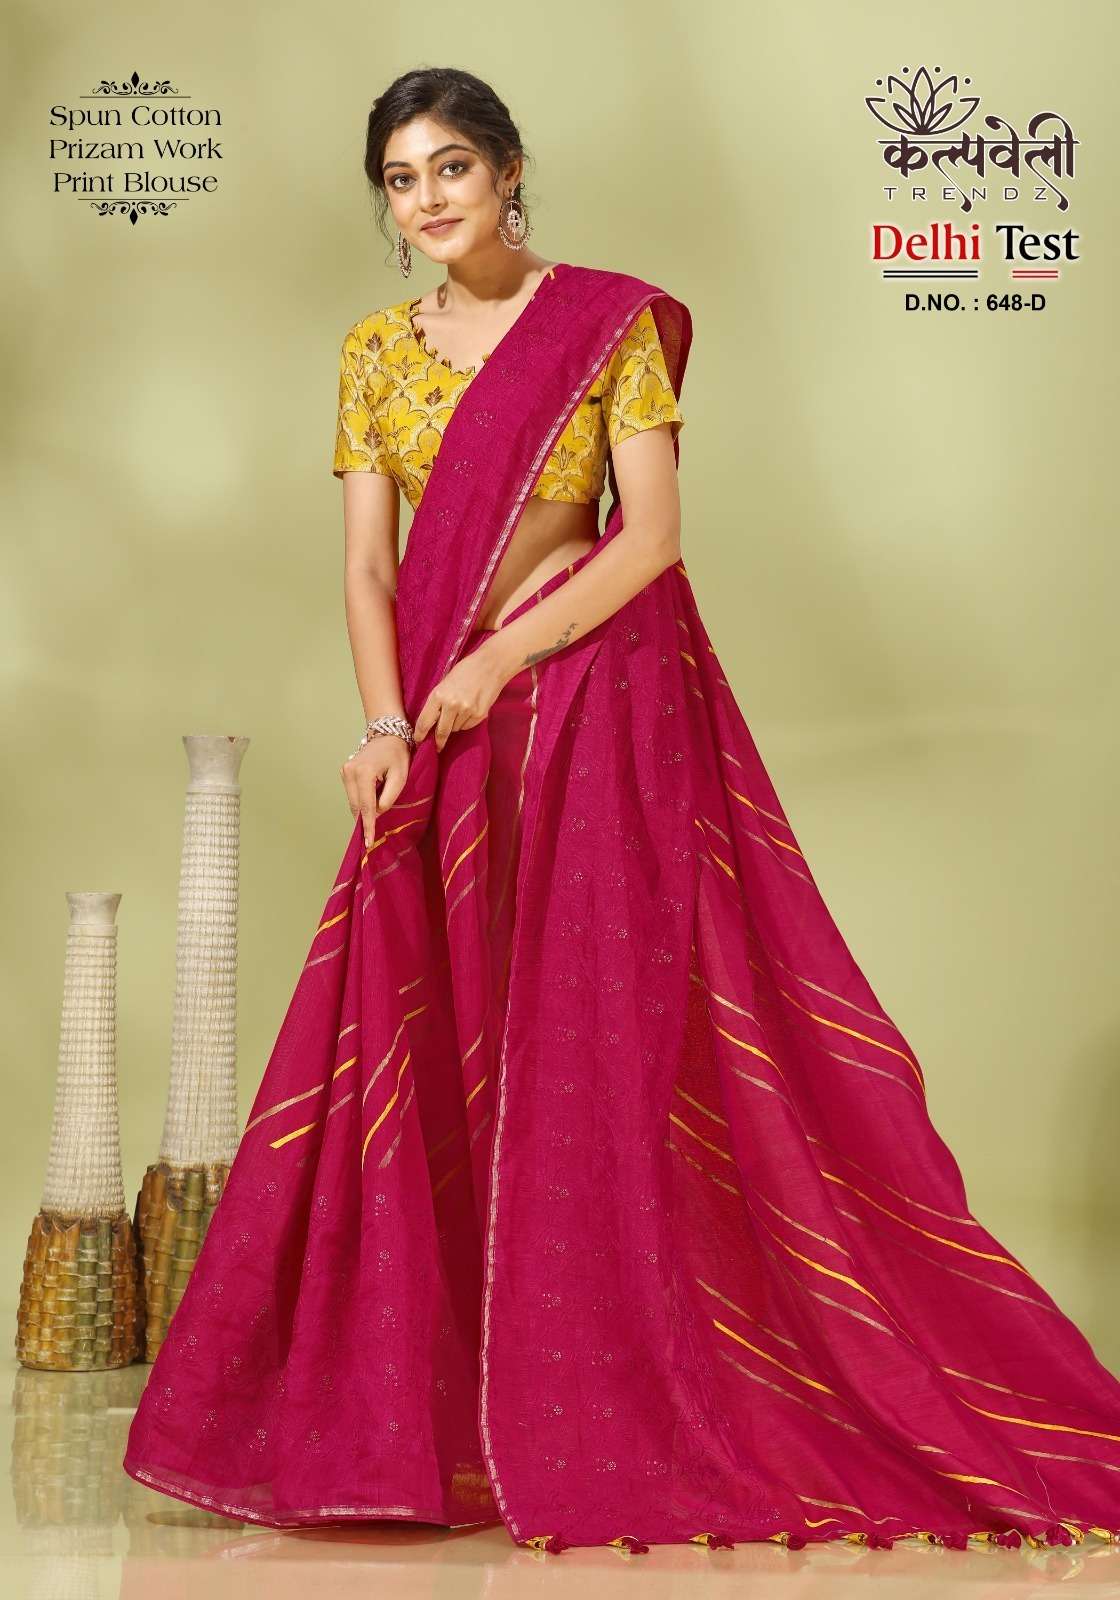 kalpavelly trendz delhi test 648 prizam work leheriya lining design cotton sarees